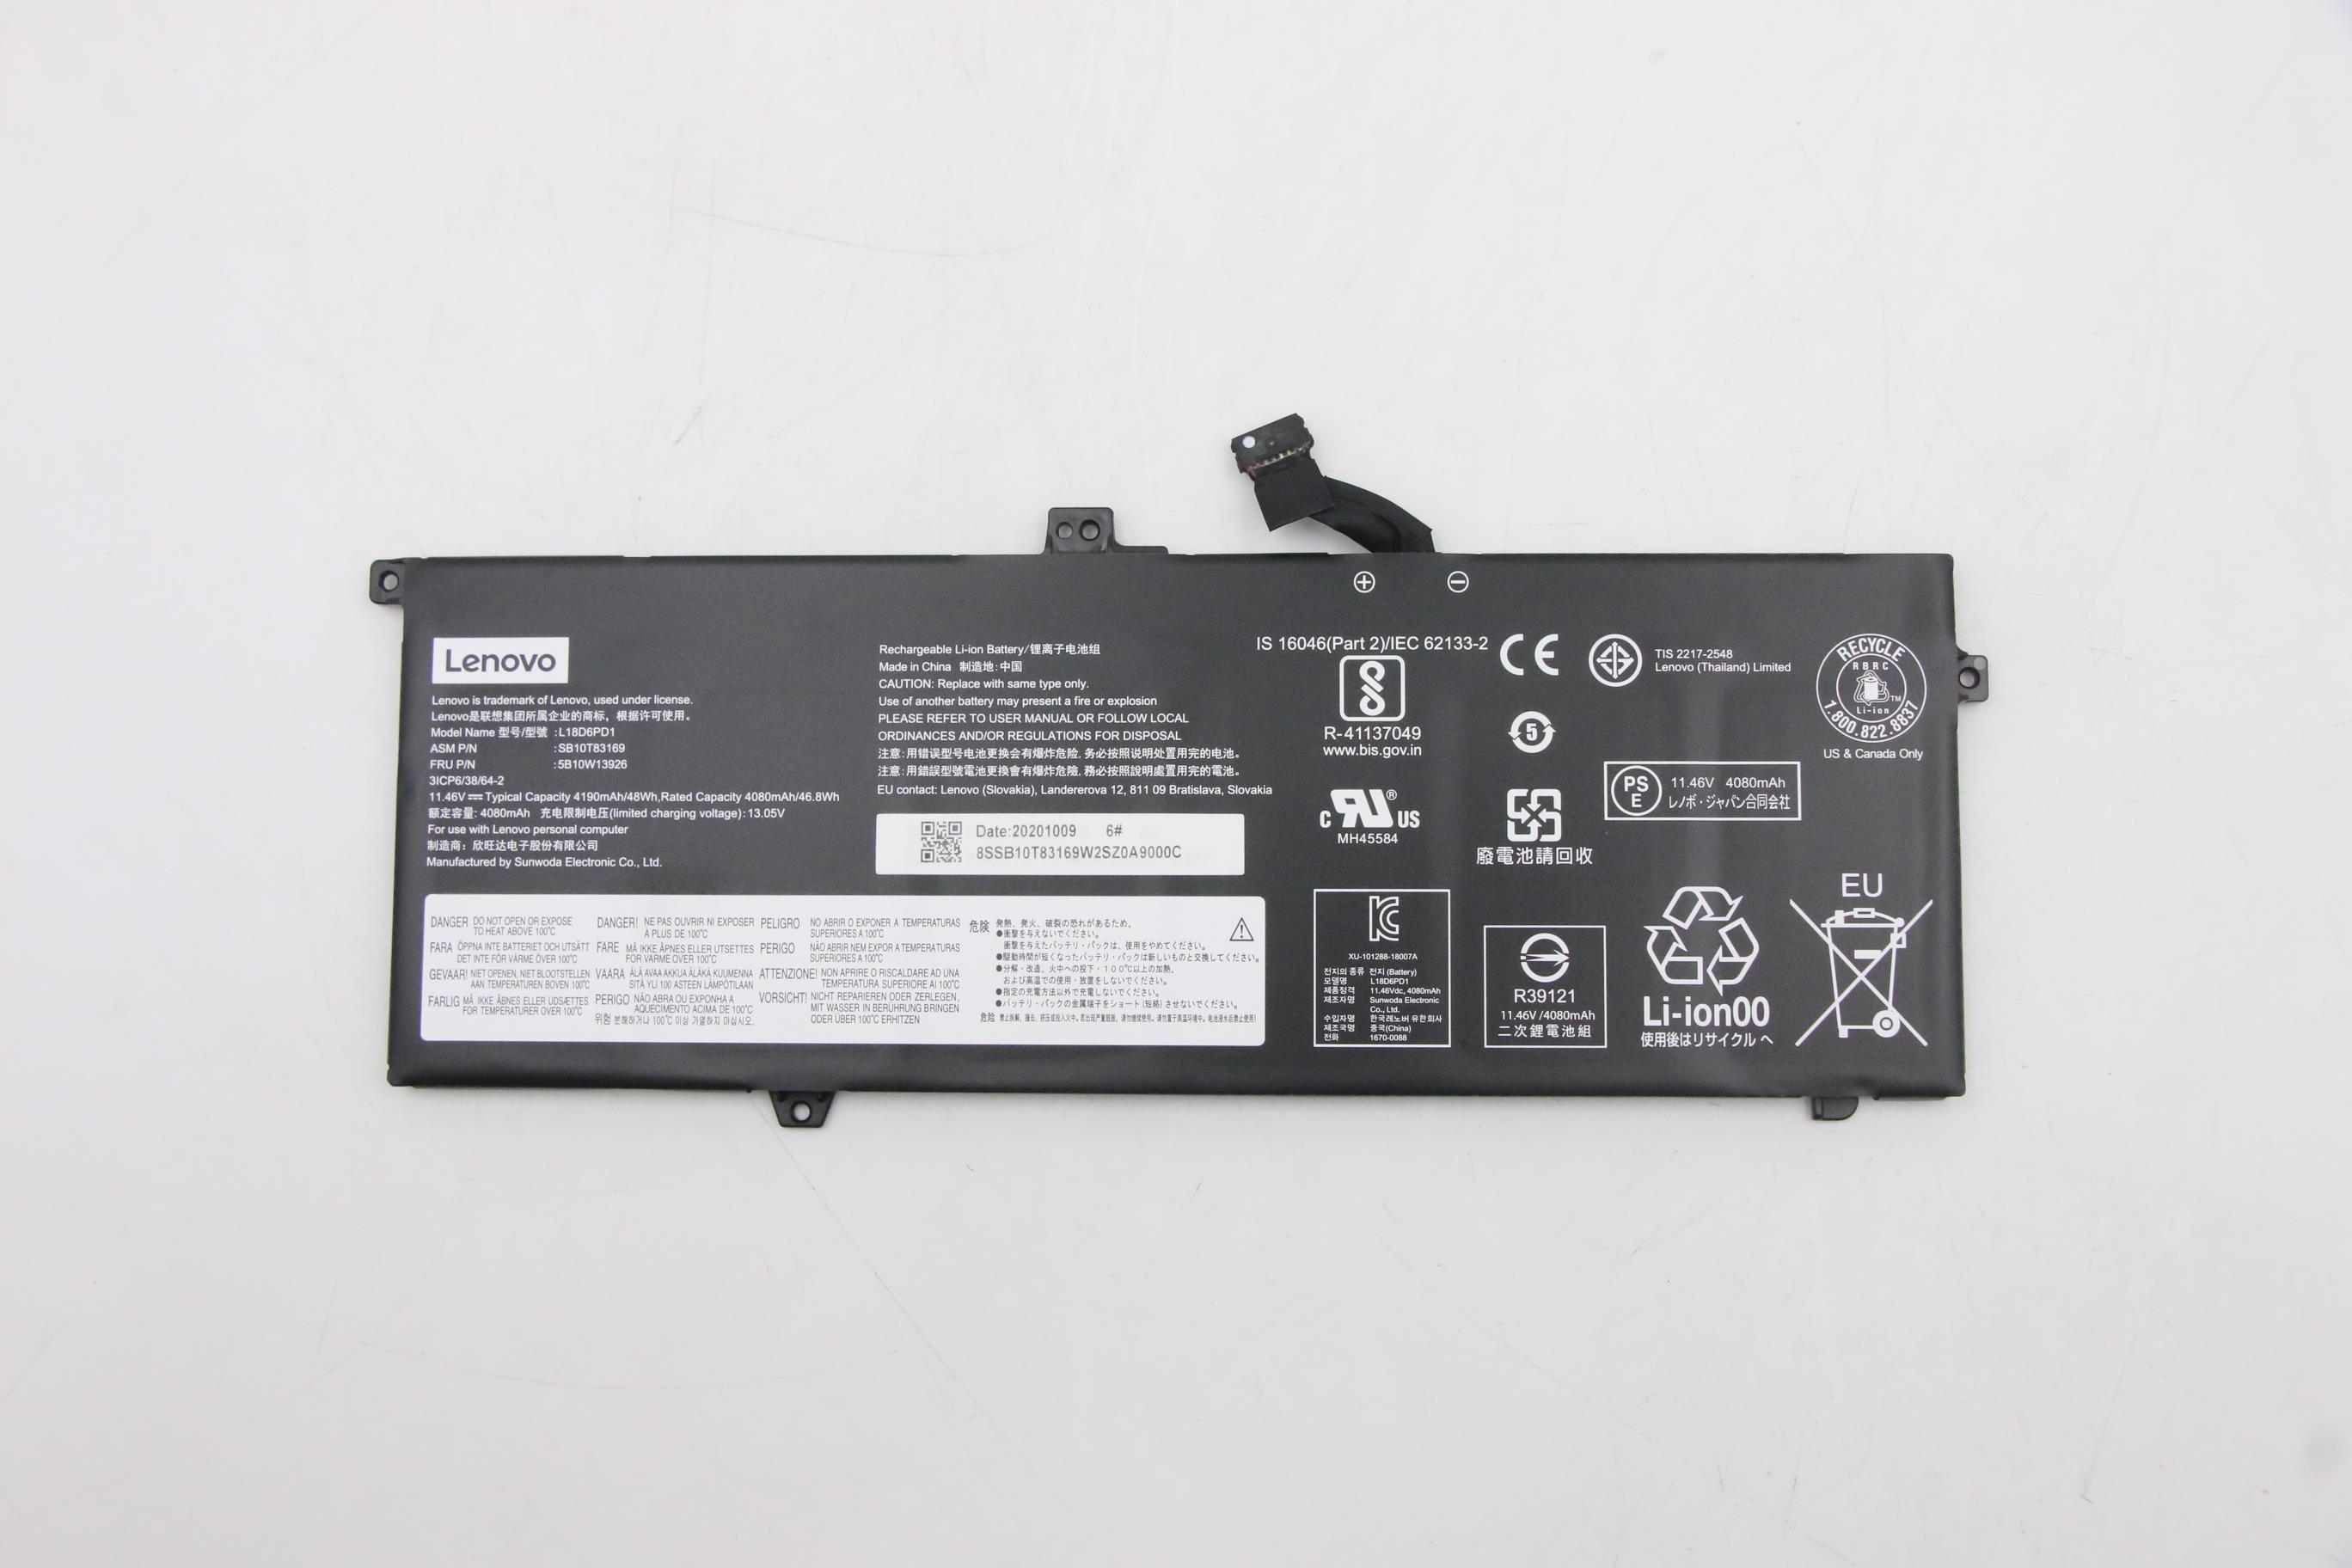 Lenovo X13 (20T2, 20T3) Laptop (ThinkPad) BATTERY - 5B10W13926